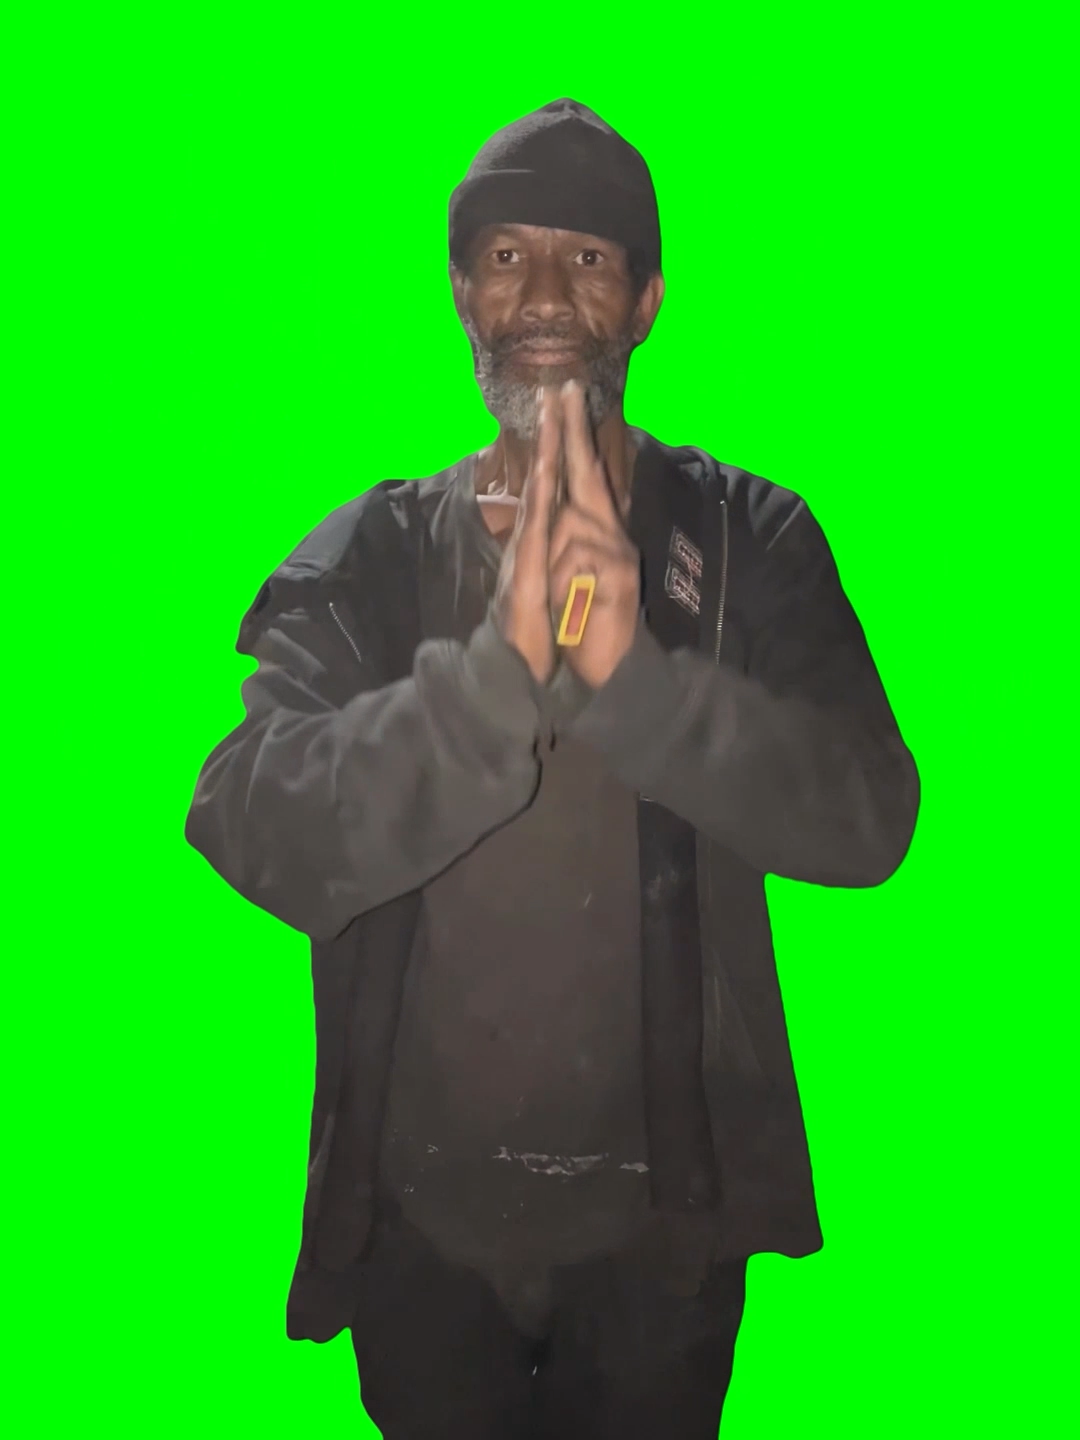 Homeless Man doing Kung Fu meme (Green Screen)